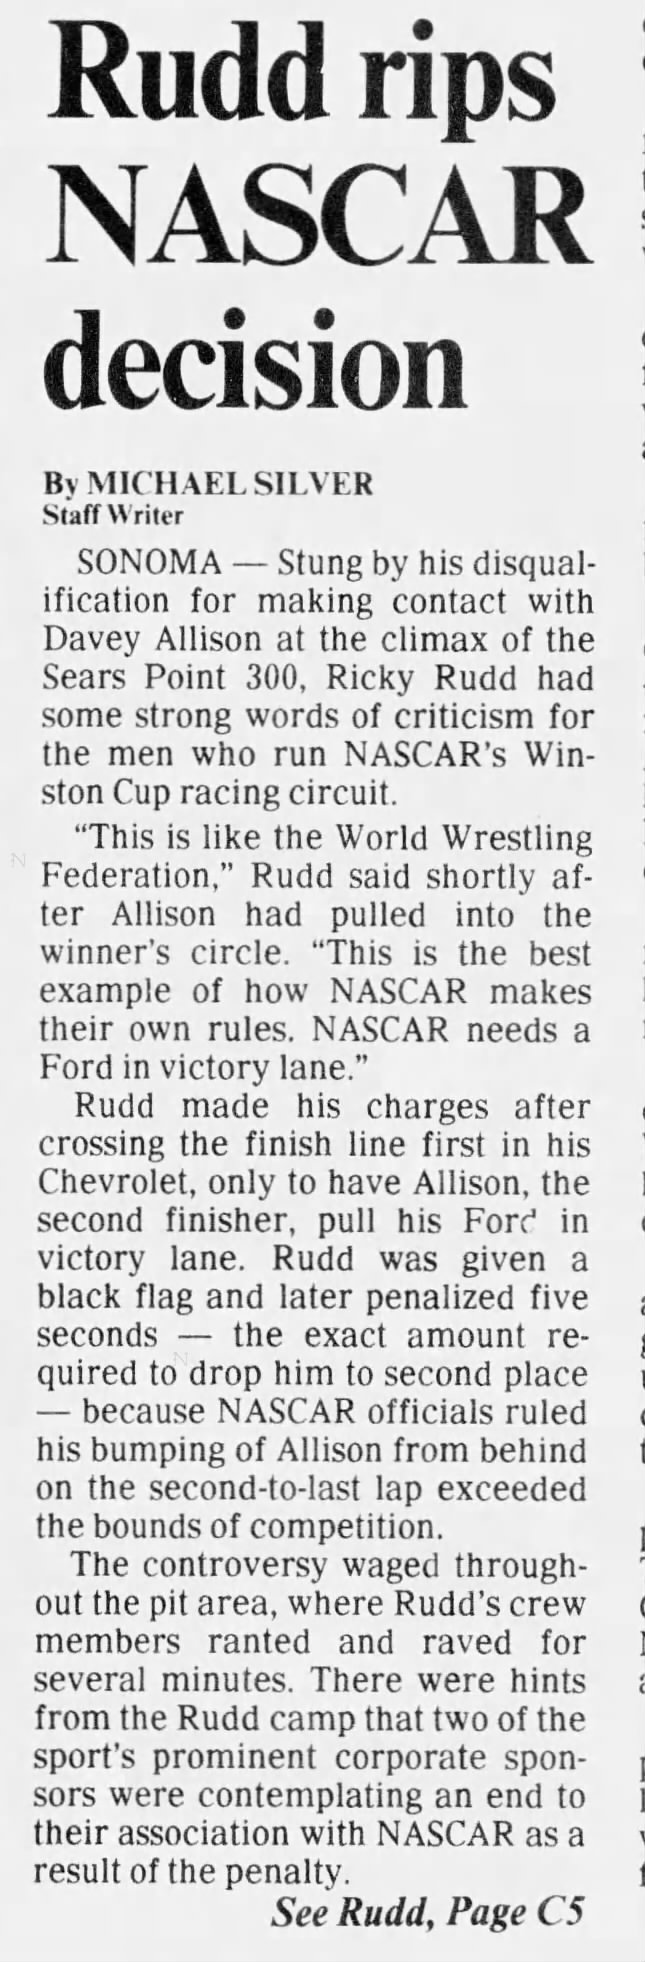 Rudd rips NASCAR decision (Part 1)